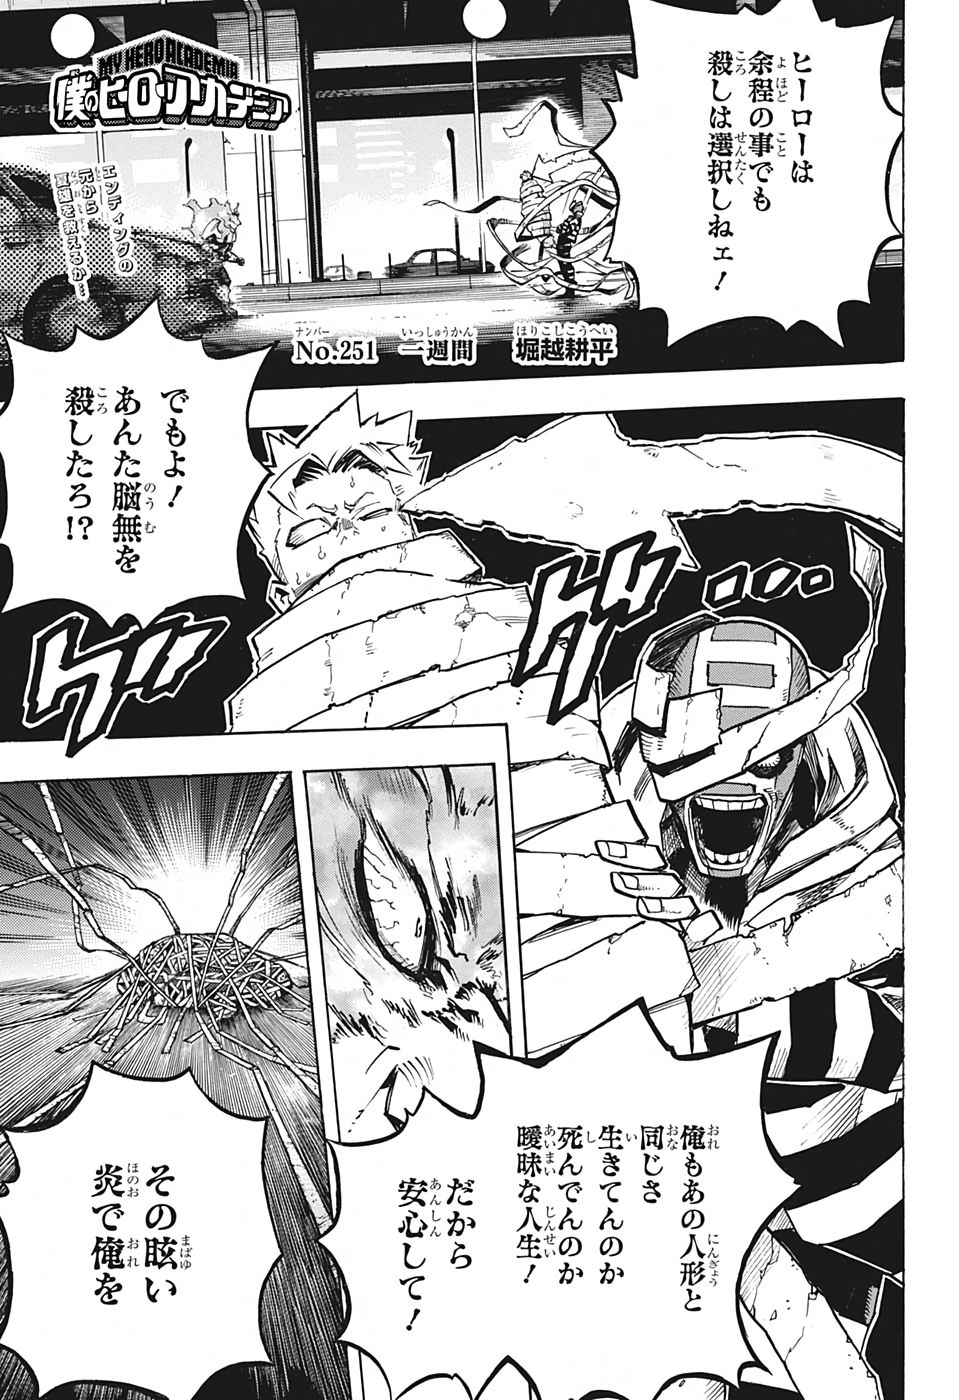 Boku no Hero Academia - Chapter 251 - Page 1